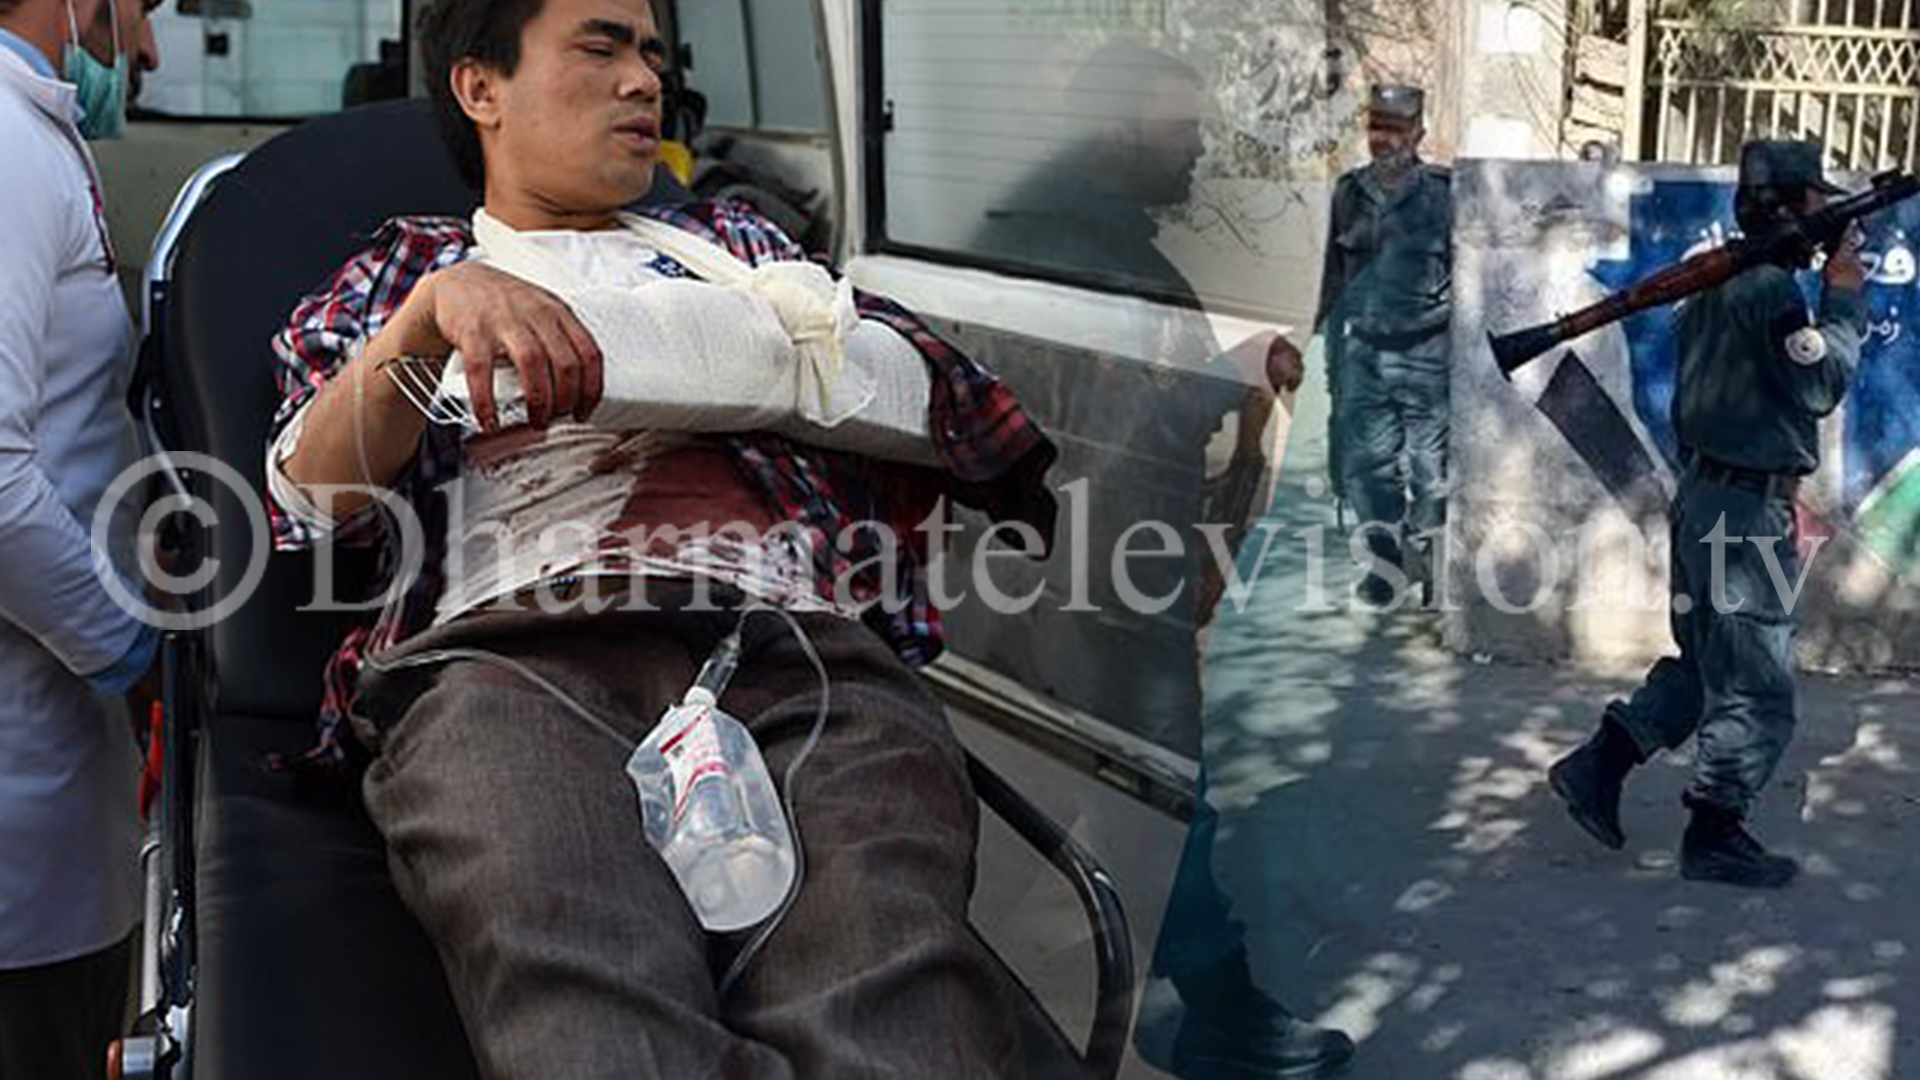 19 Killed, almost 2 dozen injured in Kabul University attack by armed gunmen